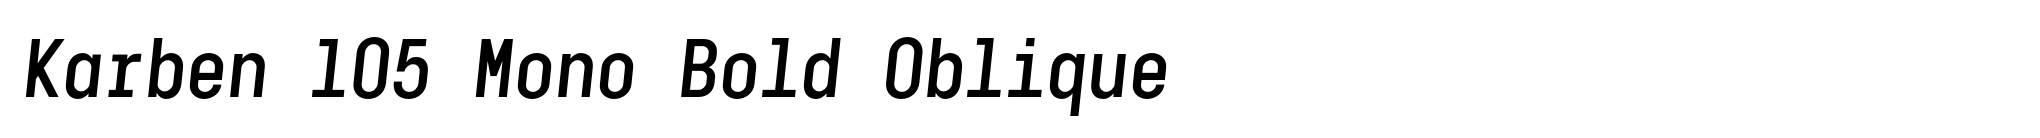 Karben 105 Mono Bold Oblique image